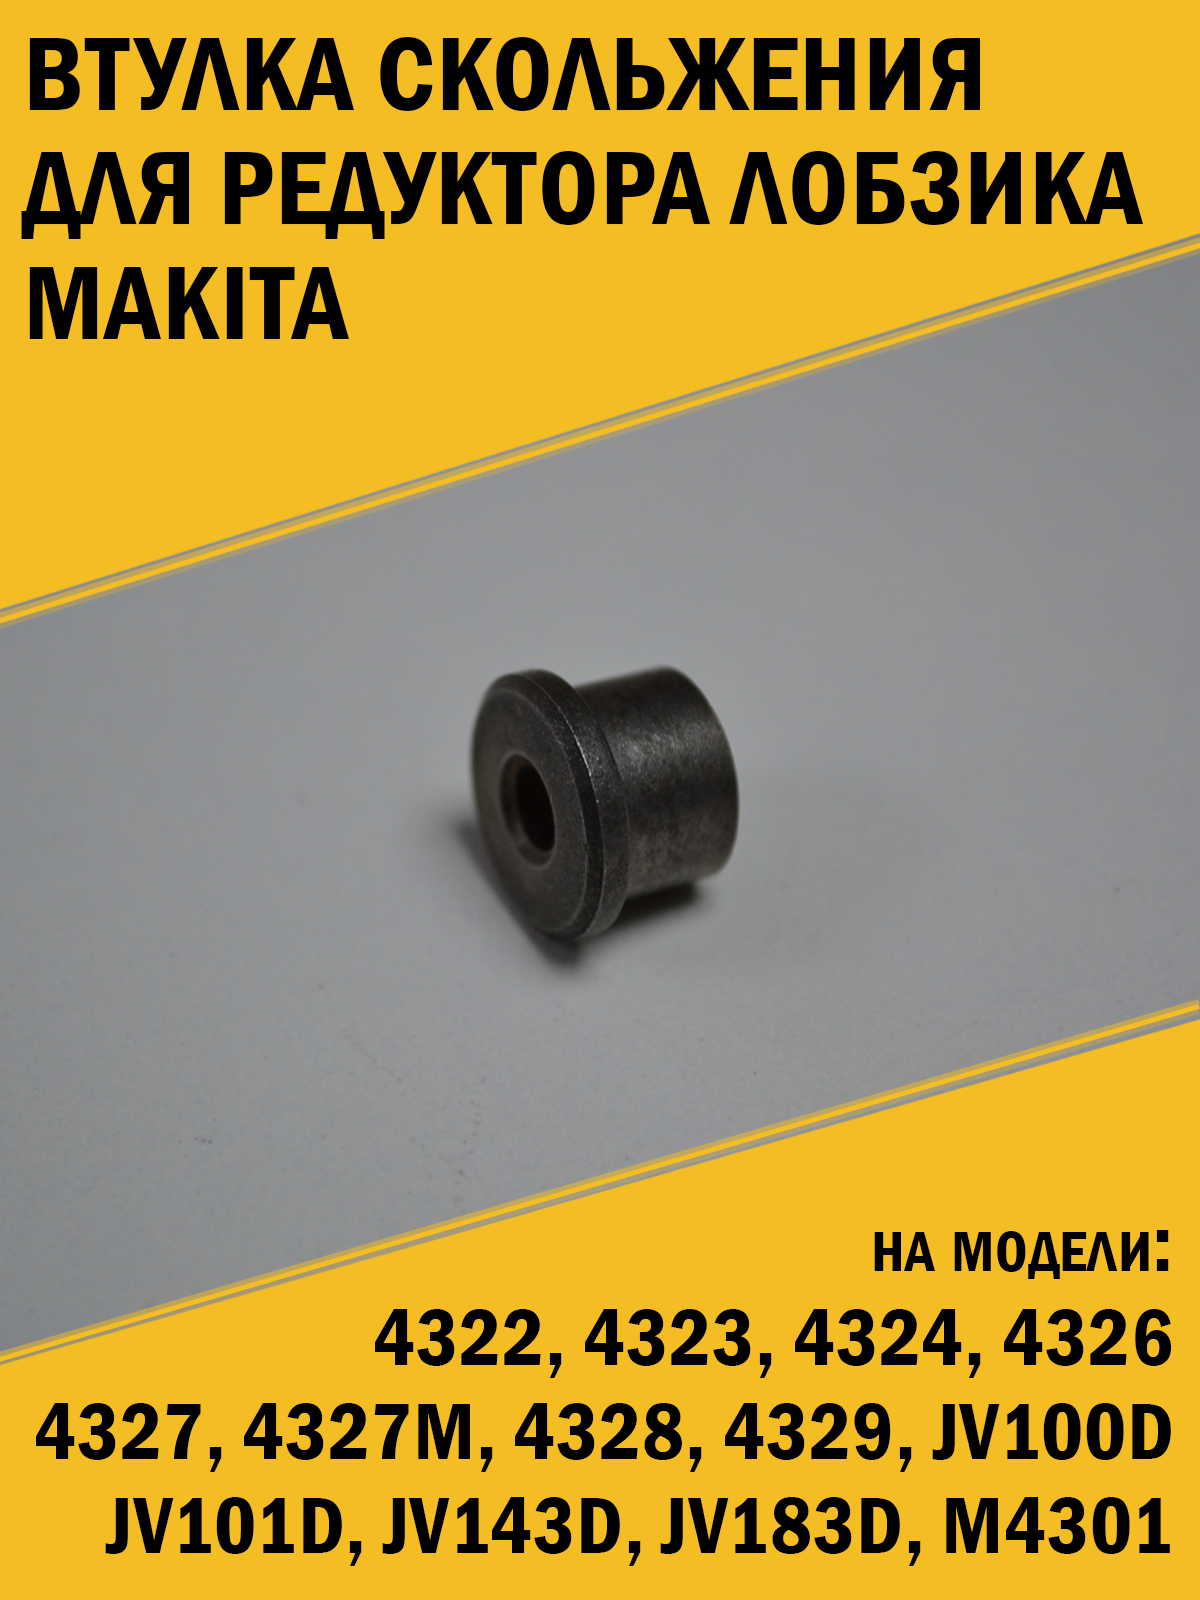 Втулка скольжения шестерни редуктора для лобзика Makita Макита 4322, 4323, 4324, 4329